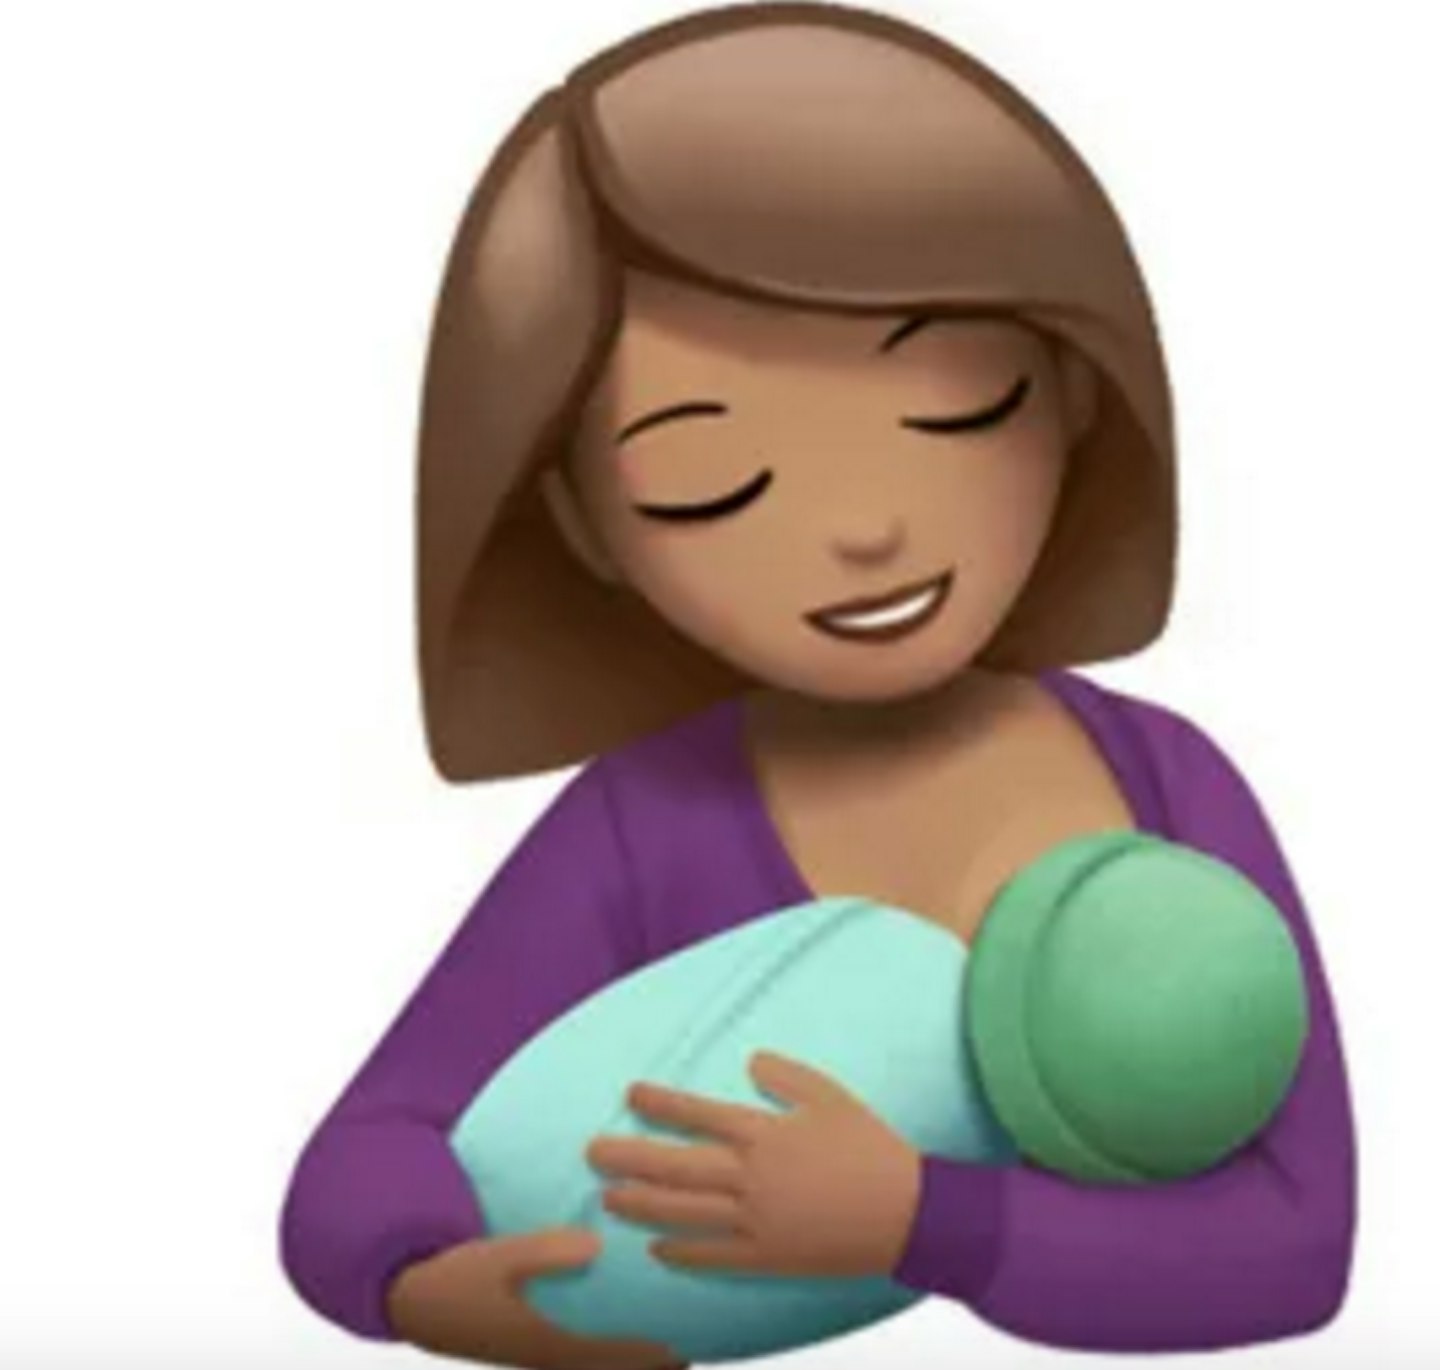 Breastfeeding woman